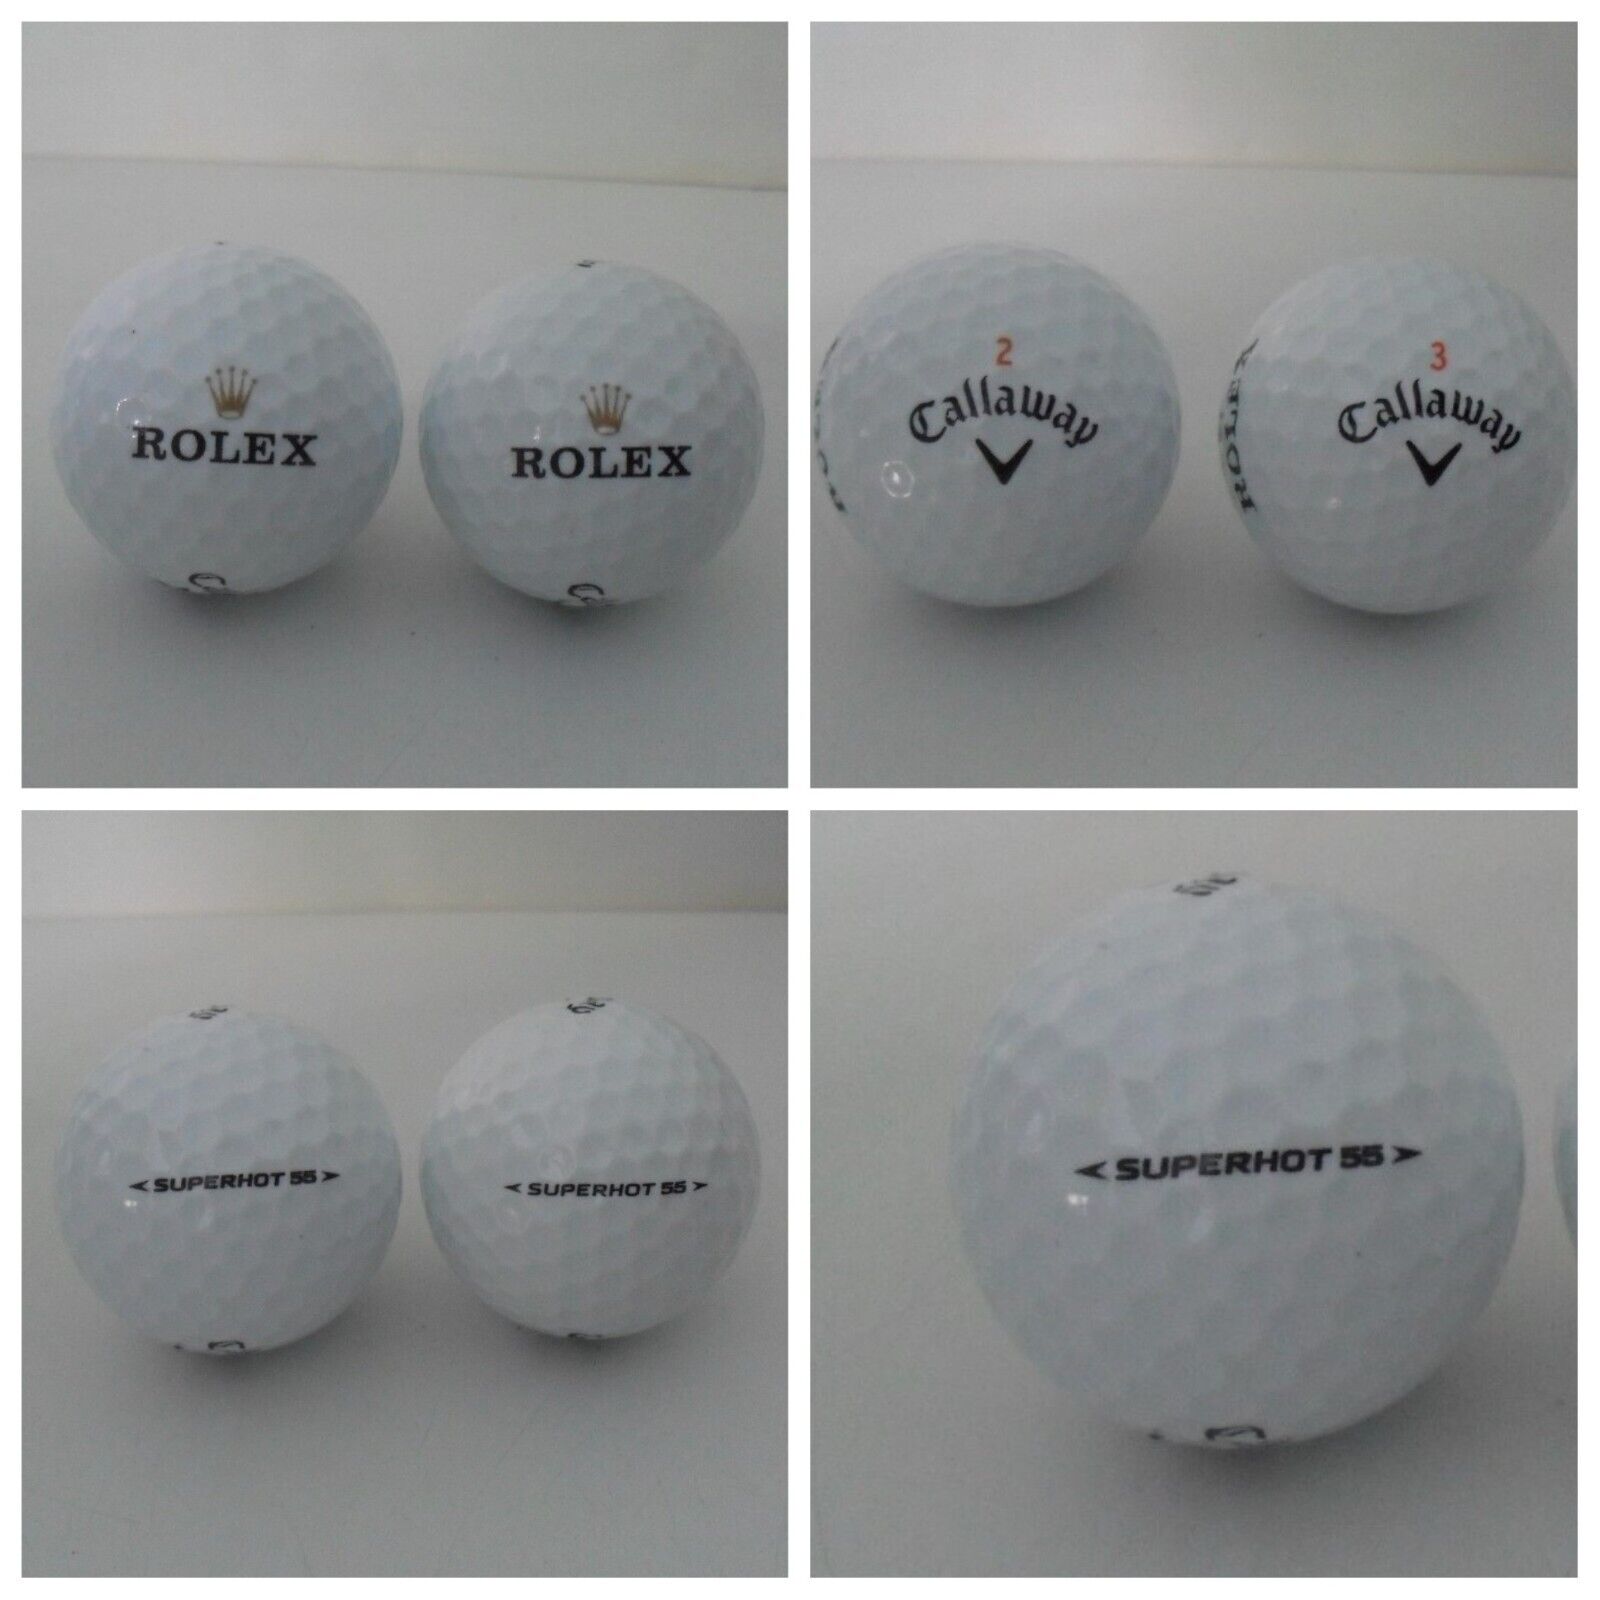 ROLEX Watch Golf Balls LOT OF 2 Callaway SUPERHOT 55 - See Photos NEVER USED